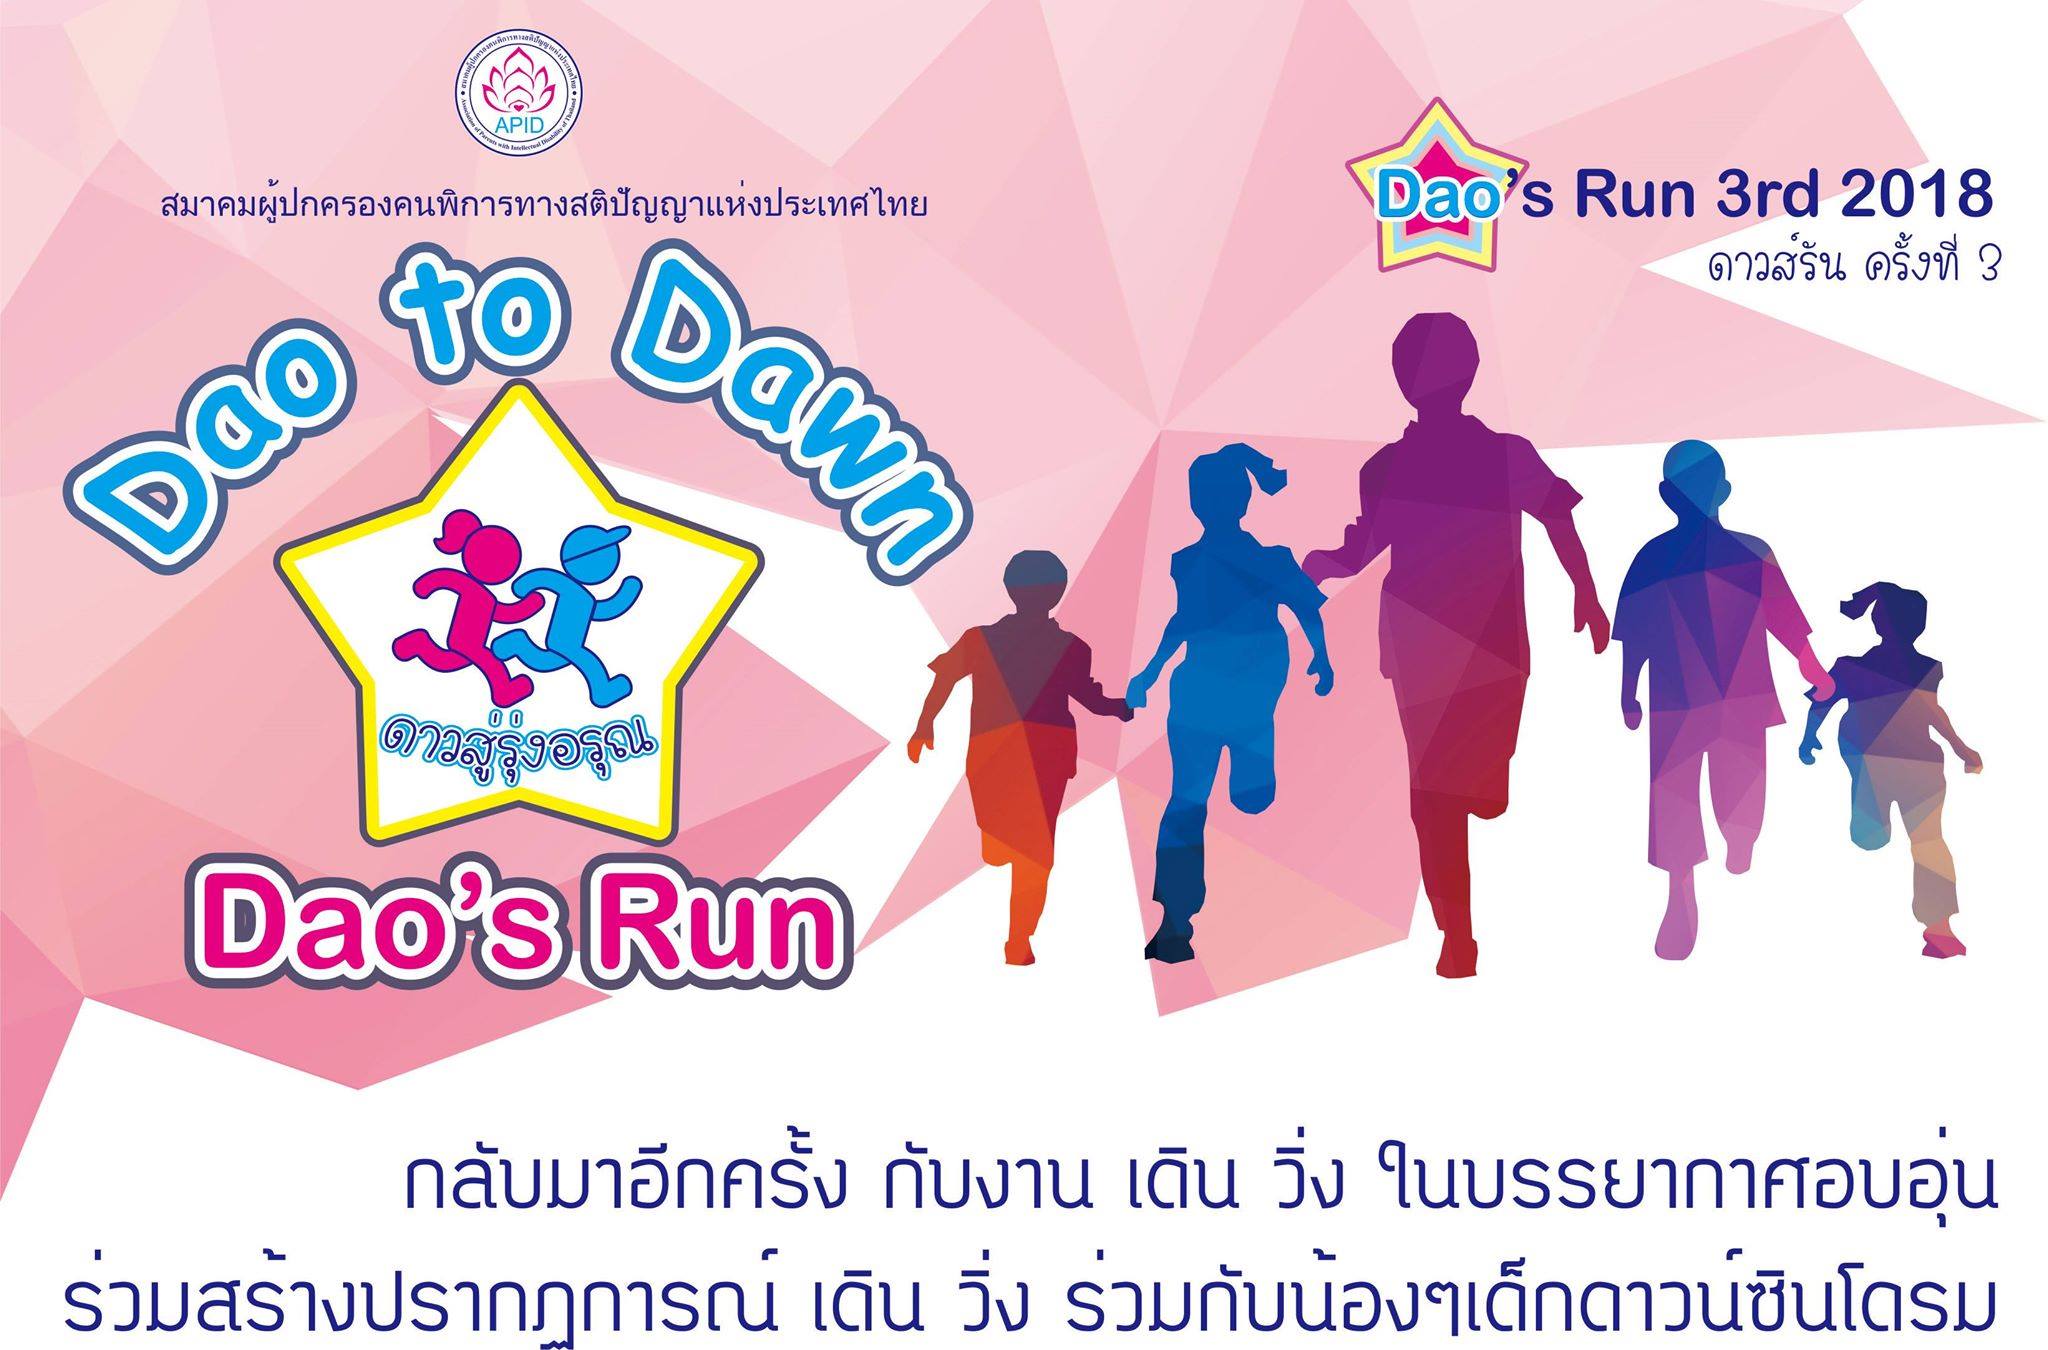 Dao to Dawn Dao's Run